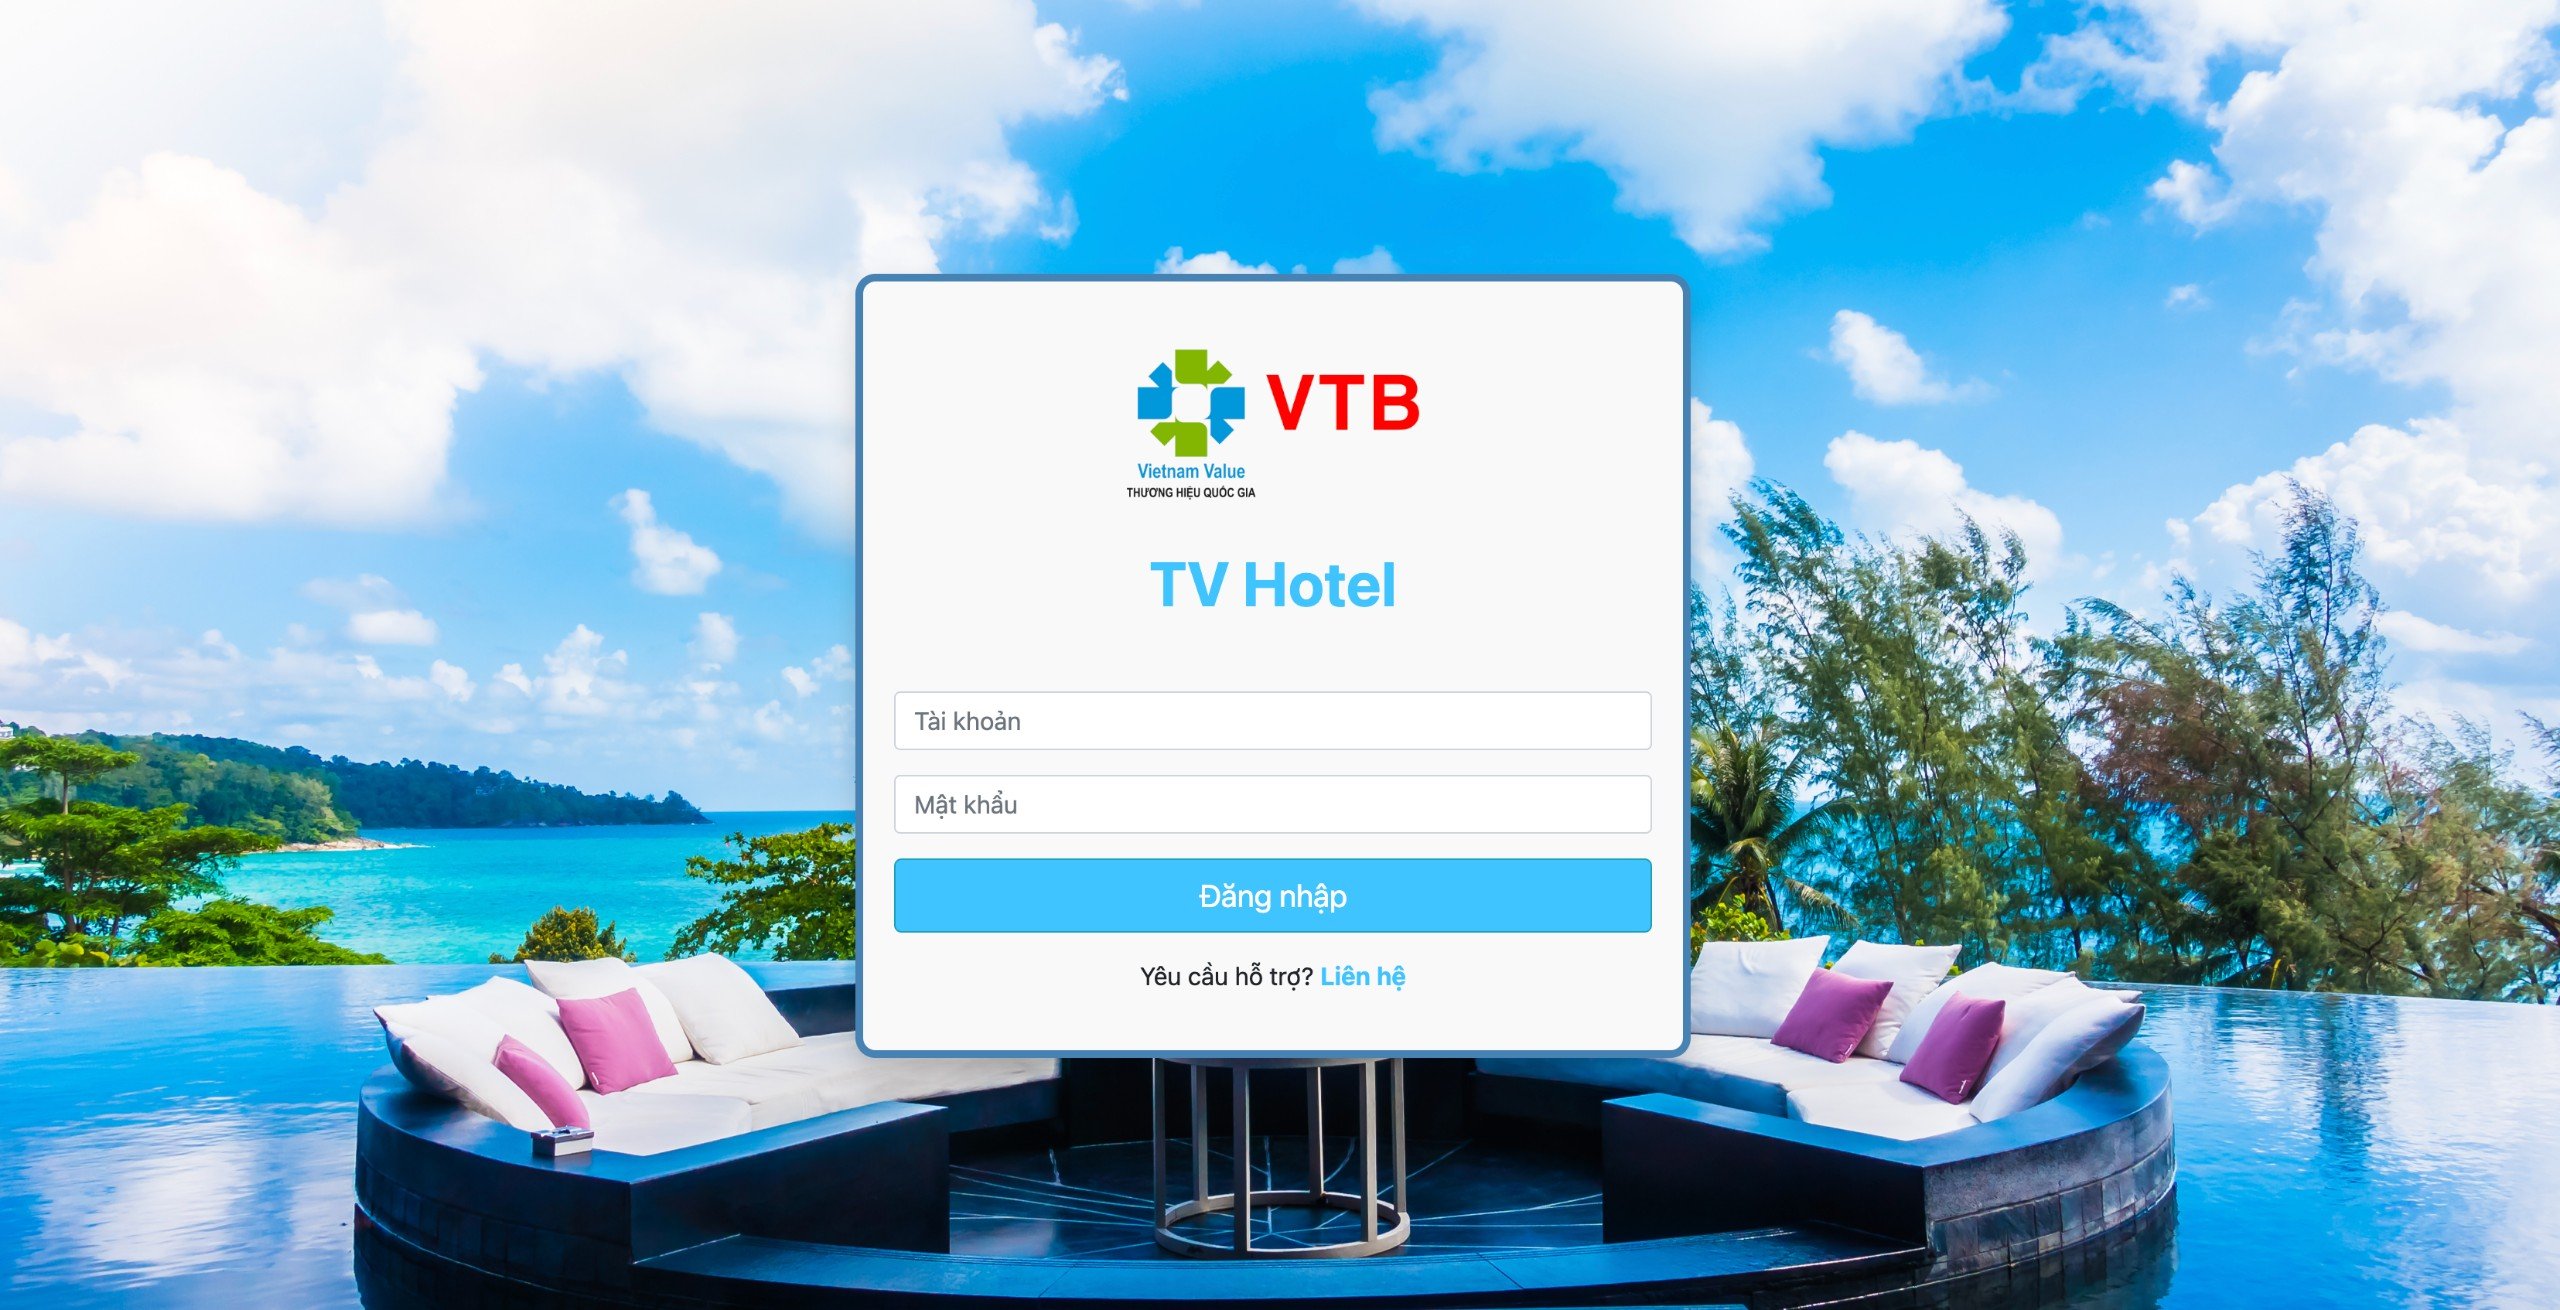 VTB HOTEL TV